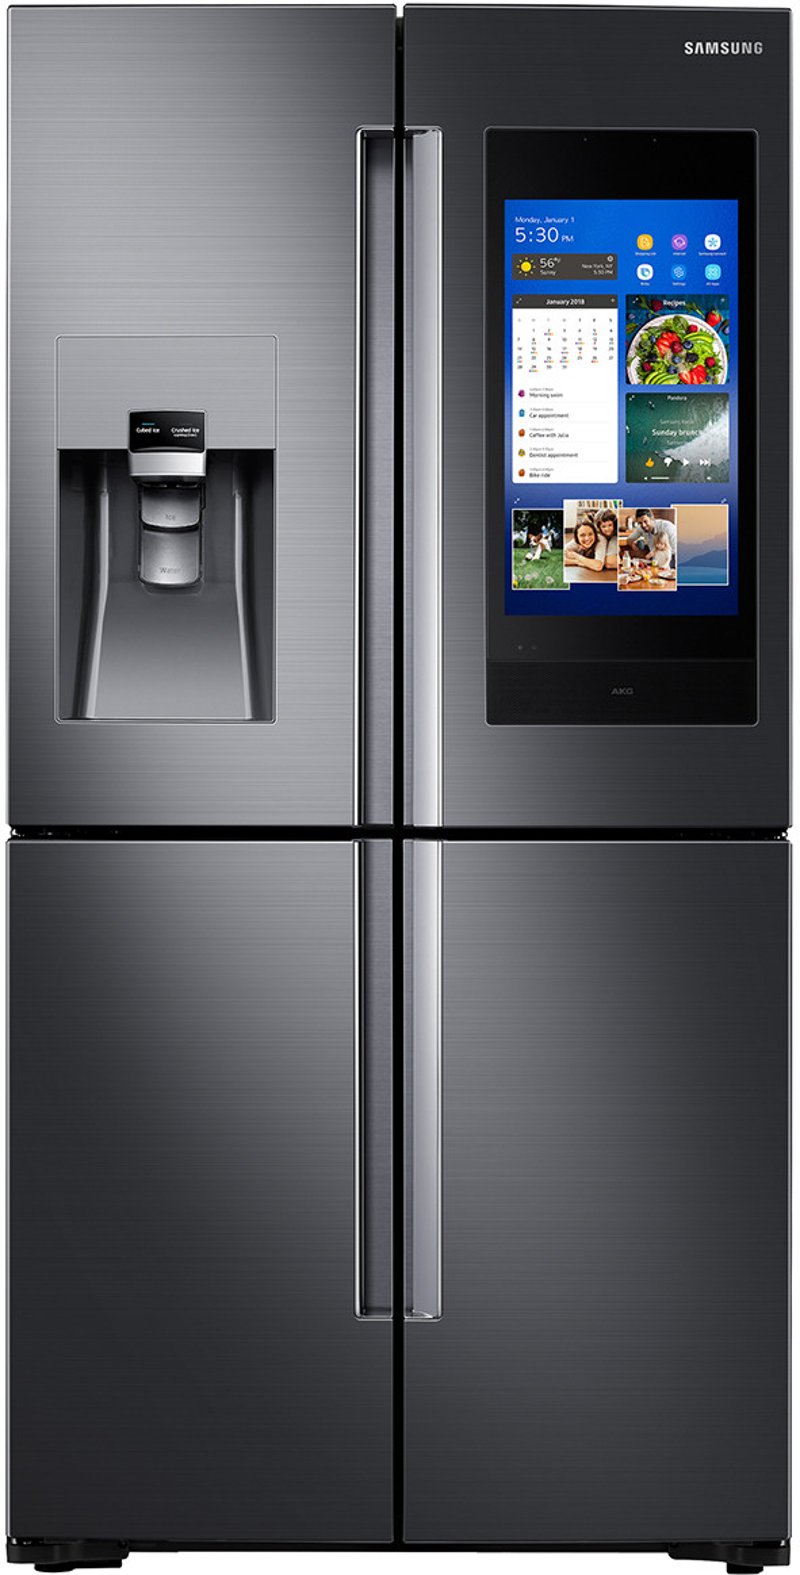 Samsung 4 Door French Door Smart Refrigerator with Family Hub and Samsung Smart Fridge Black Stainless Steel